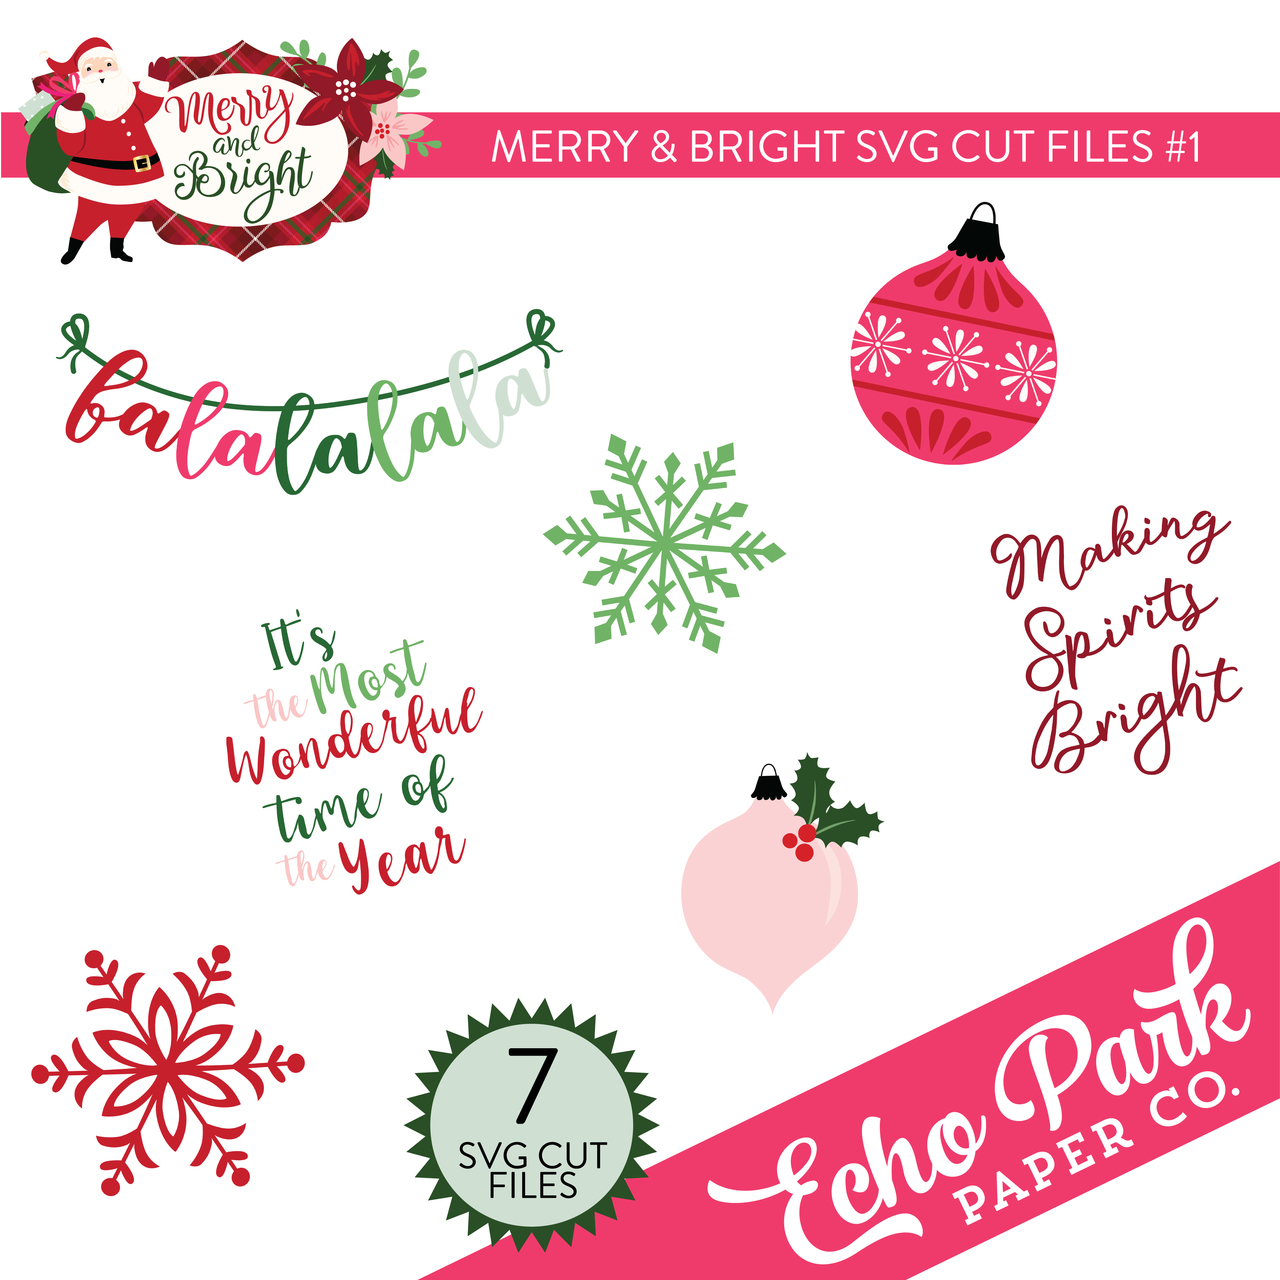 Merry & Bright SVG Cut Files #1